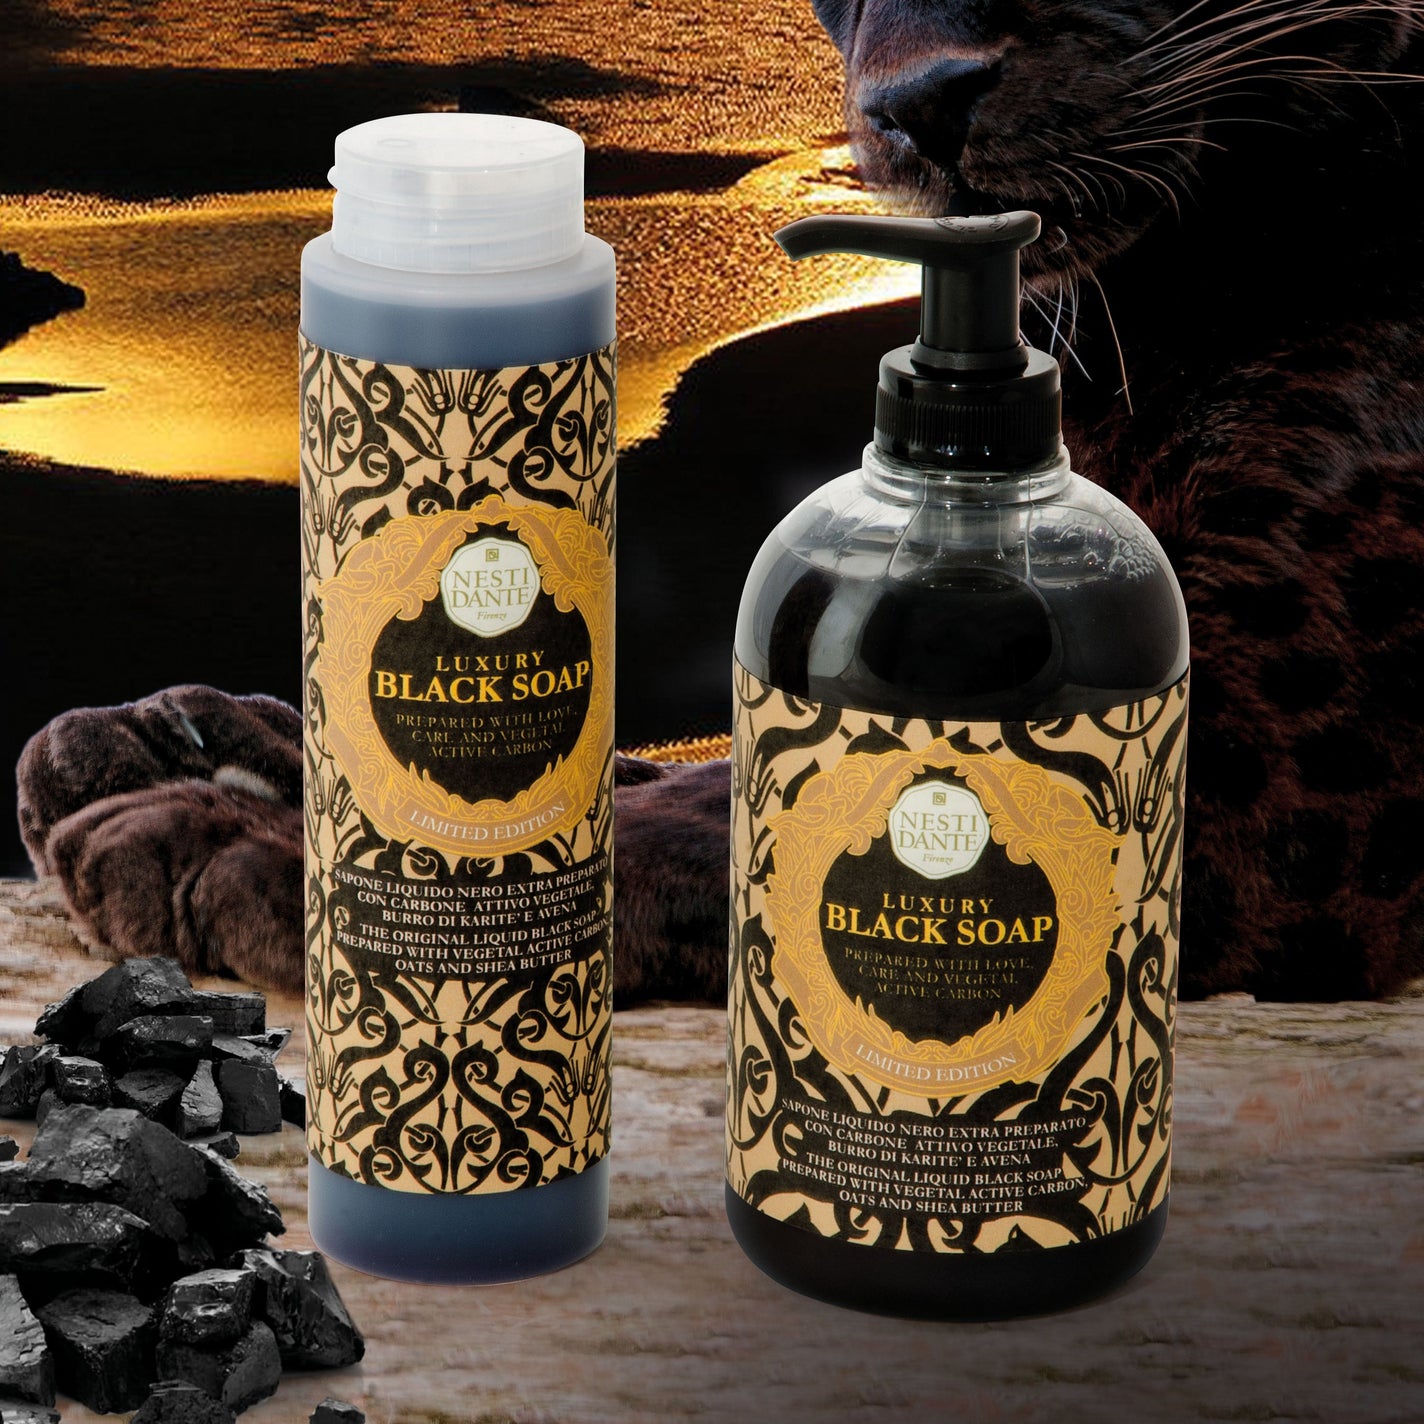 Nesti Dante Luxury Black Liquid Soap/Shower Gel - 300ml